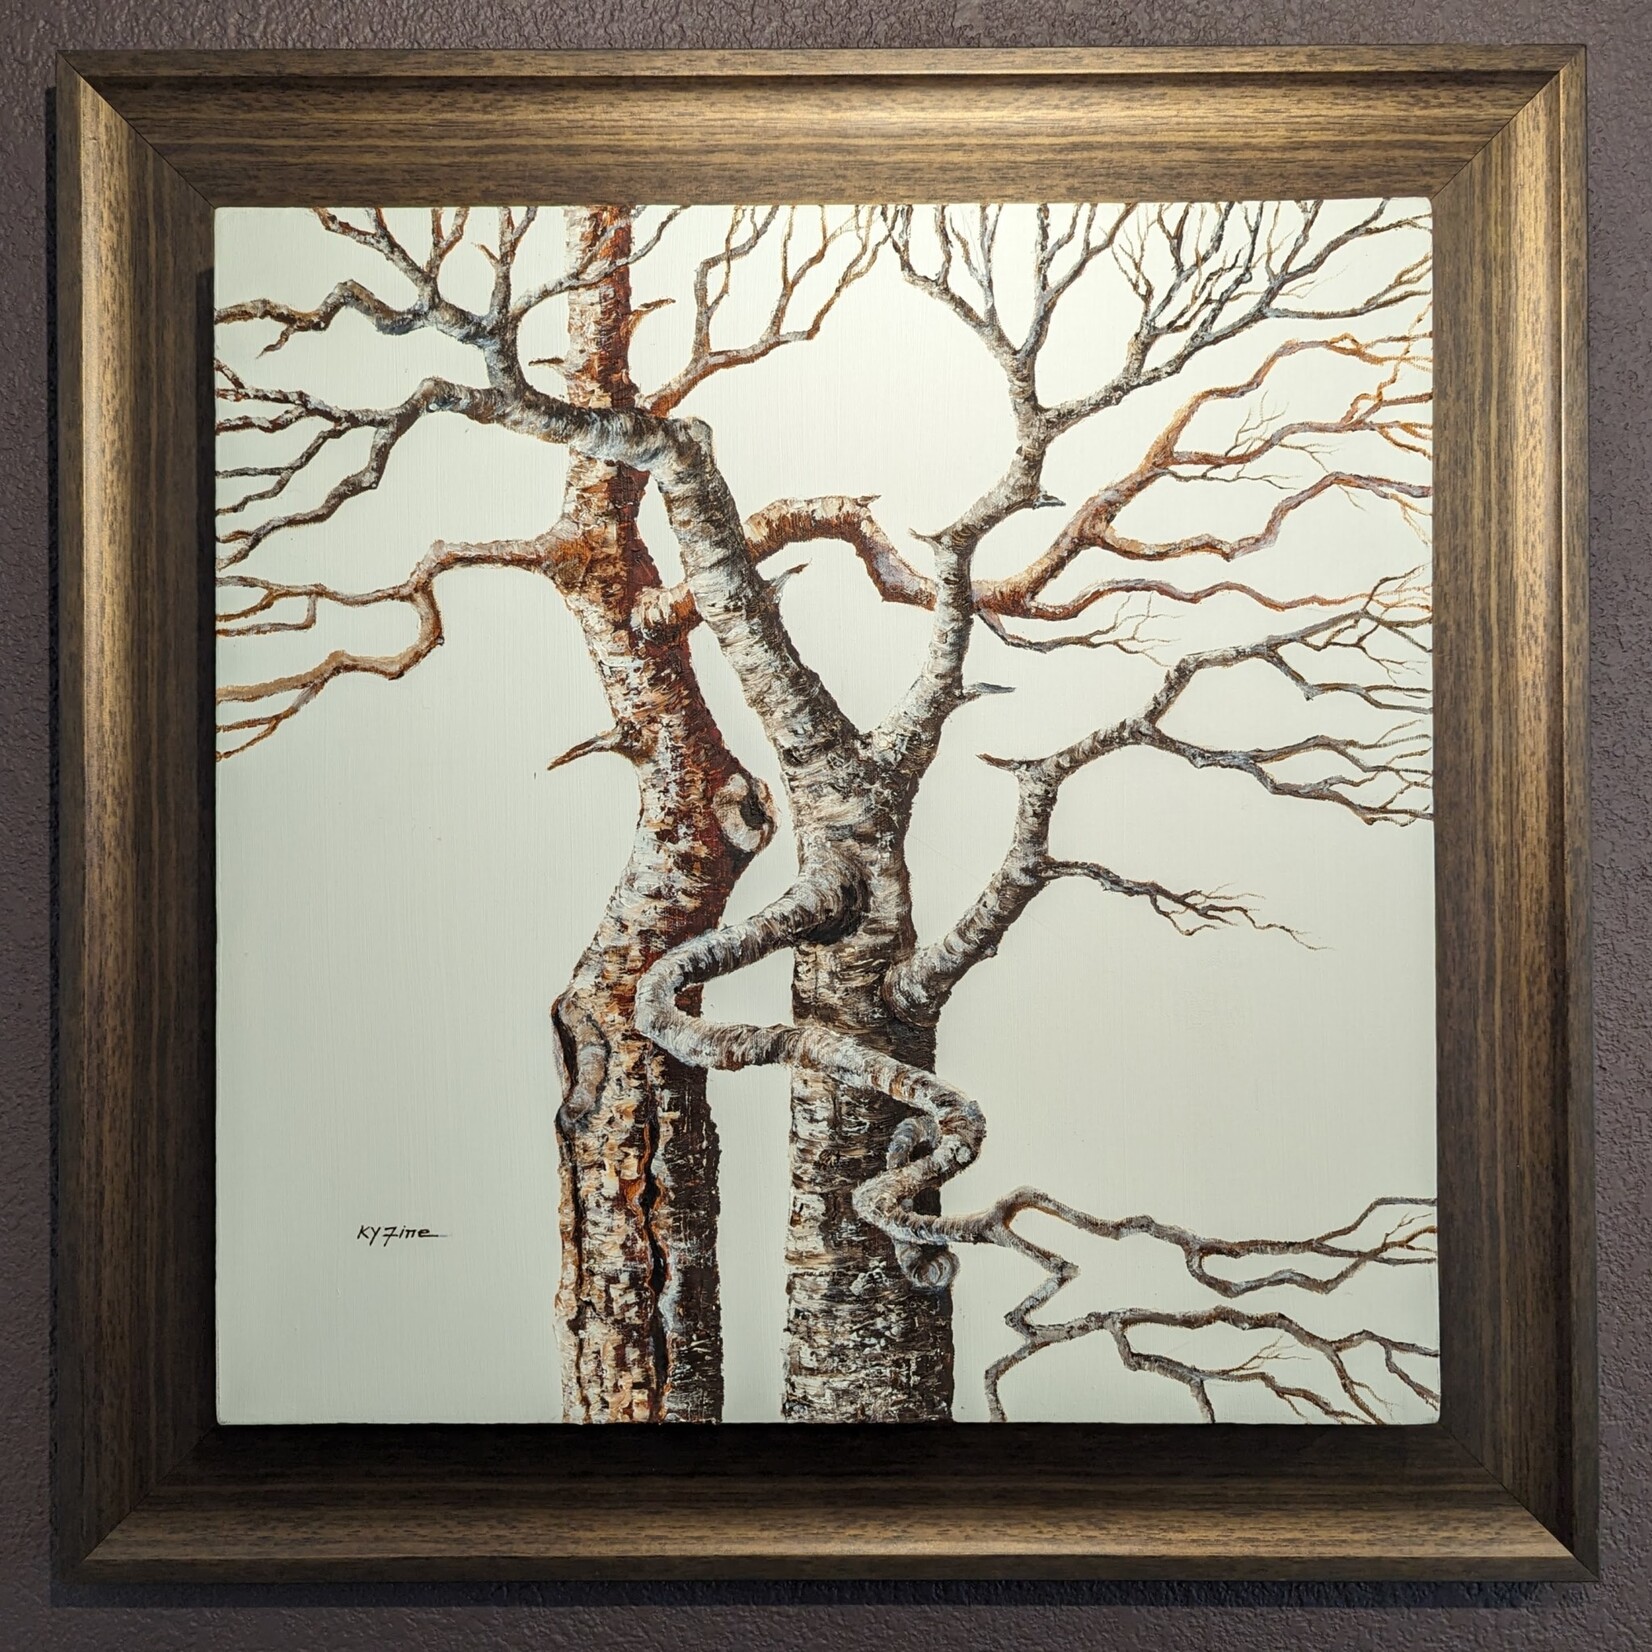 K. Yen Fine "Trees in Three Directions"